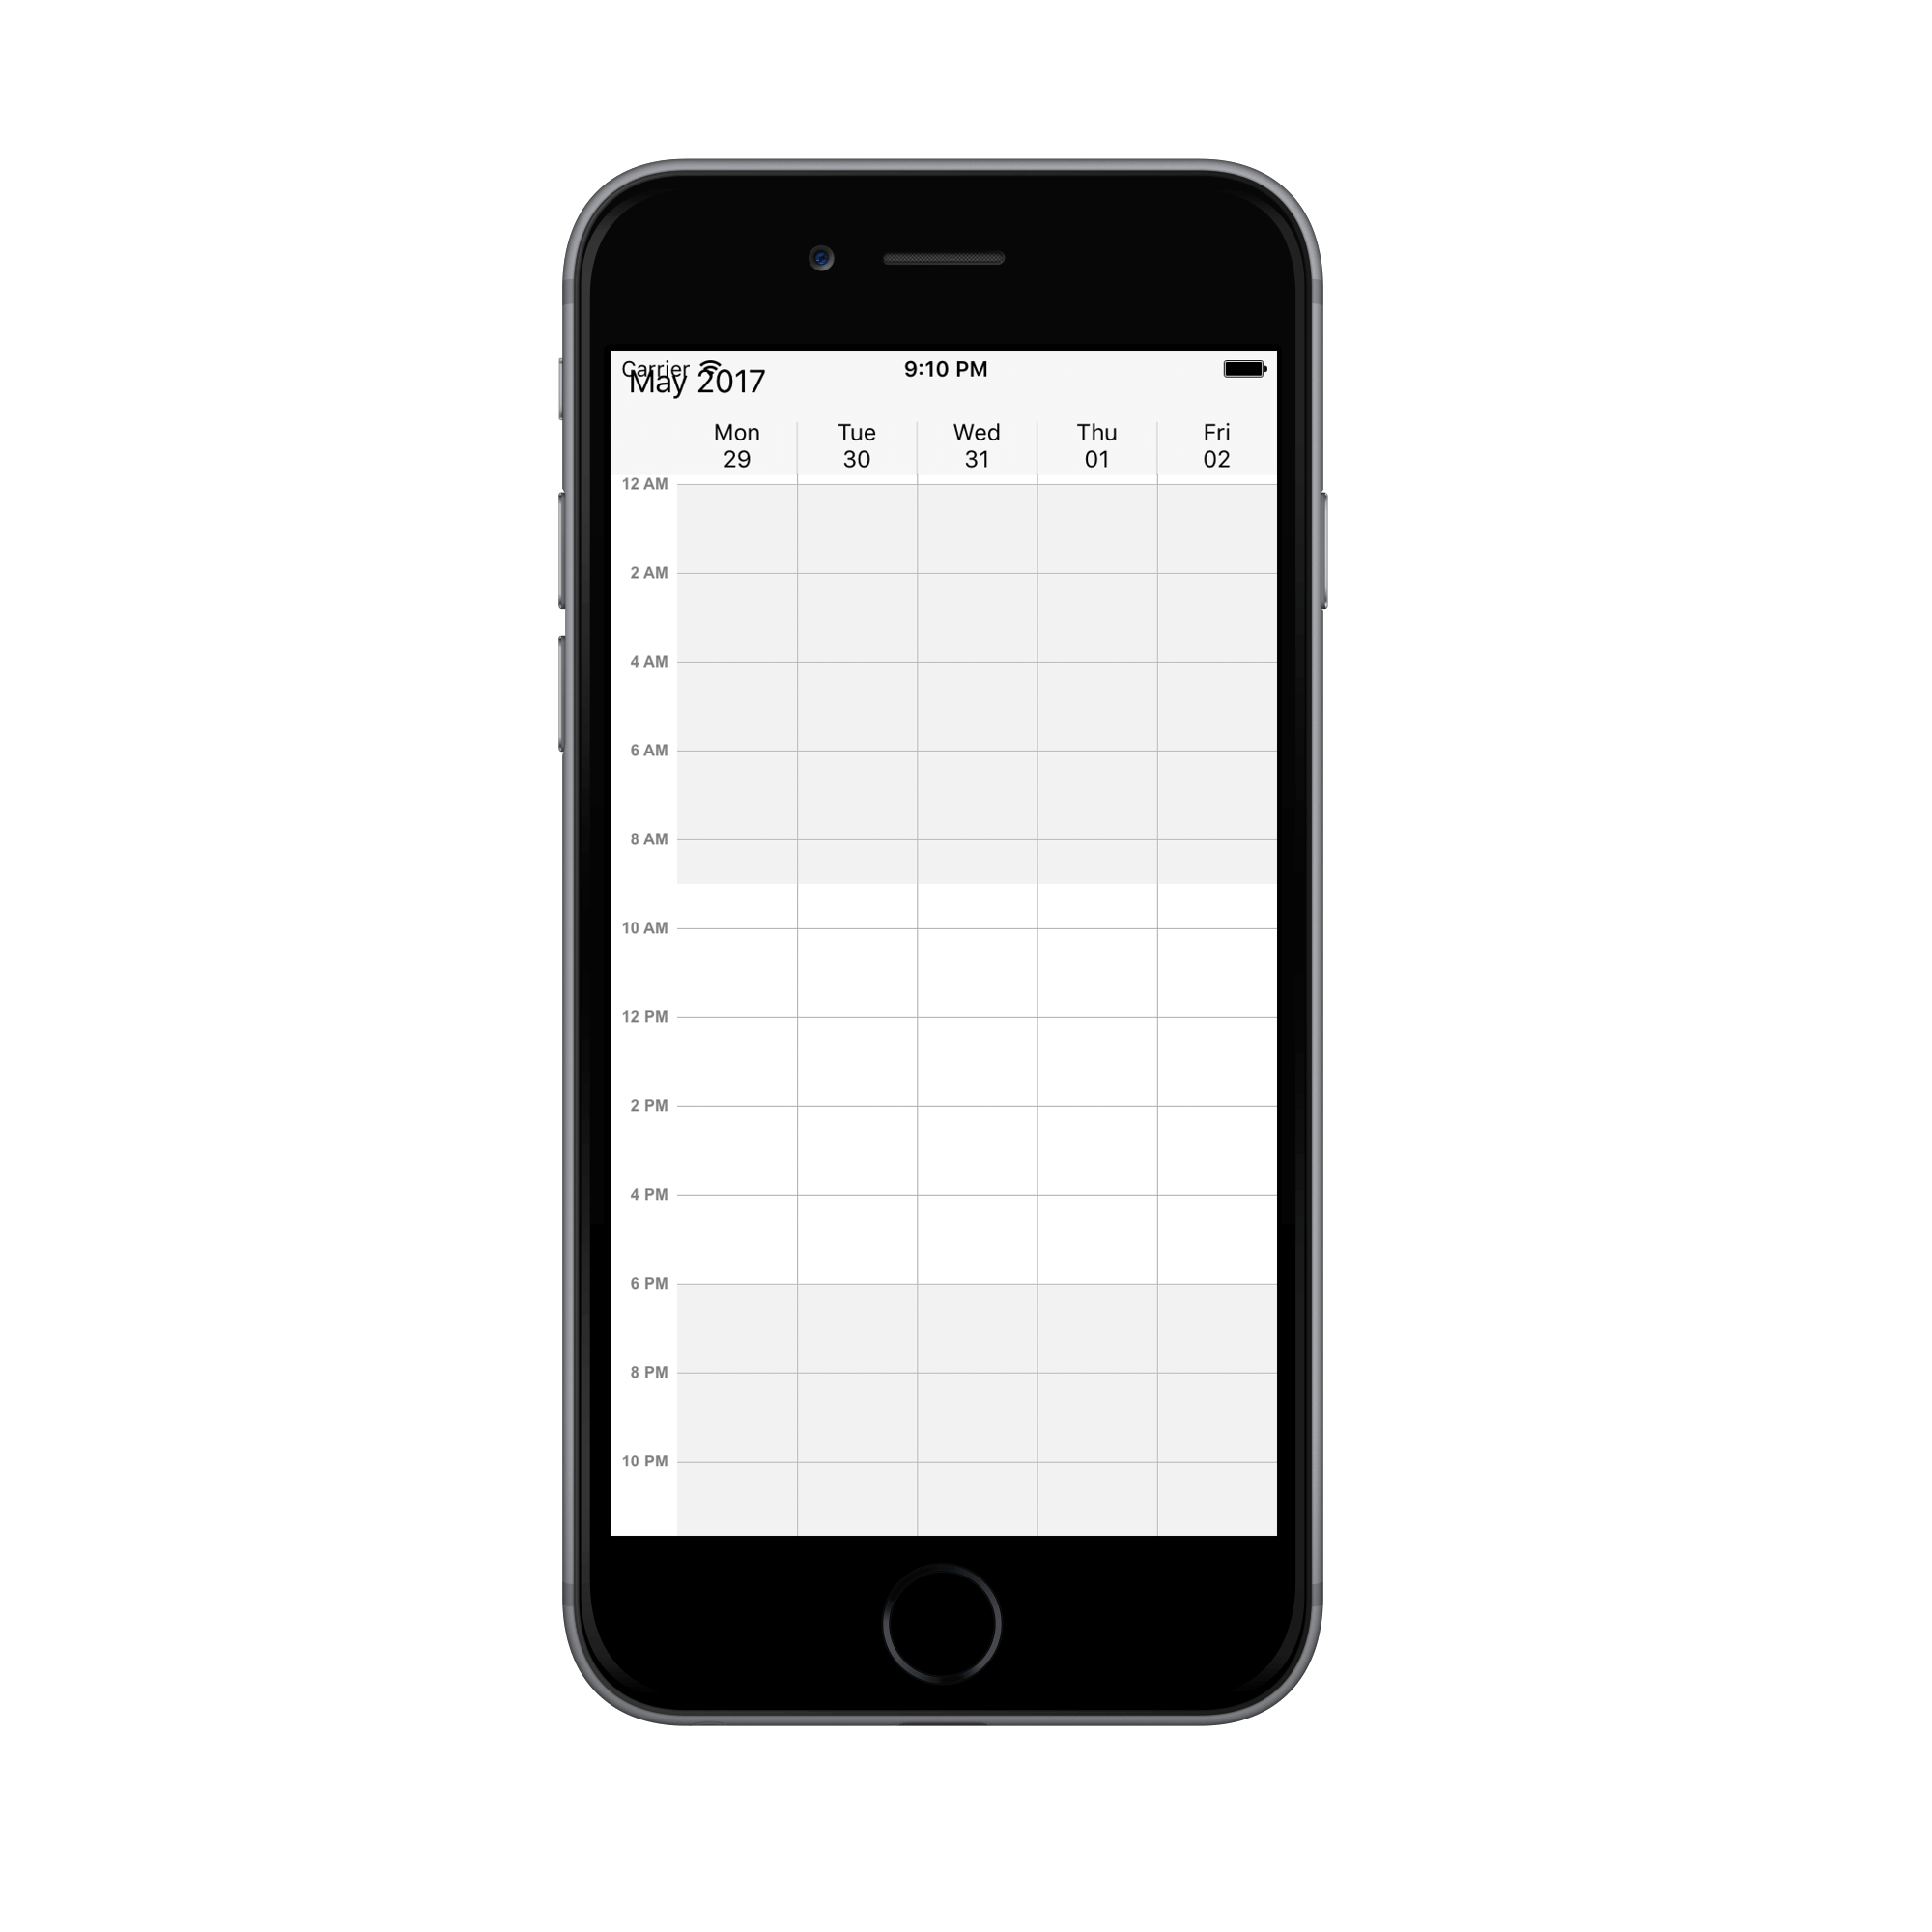 Work week view time interval customization for schedule in Xamarin.iOS